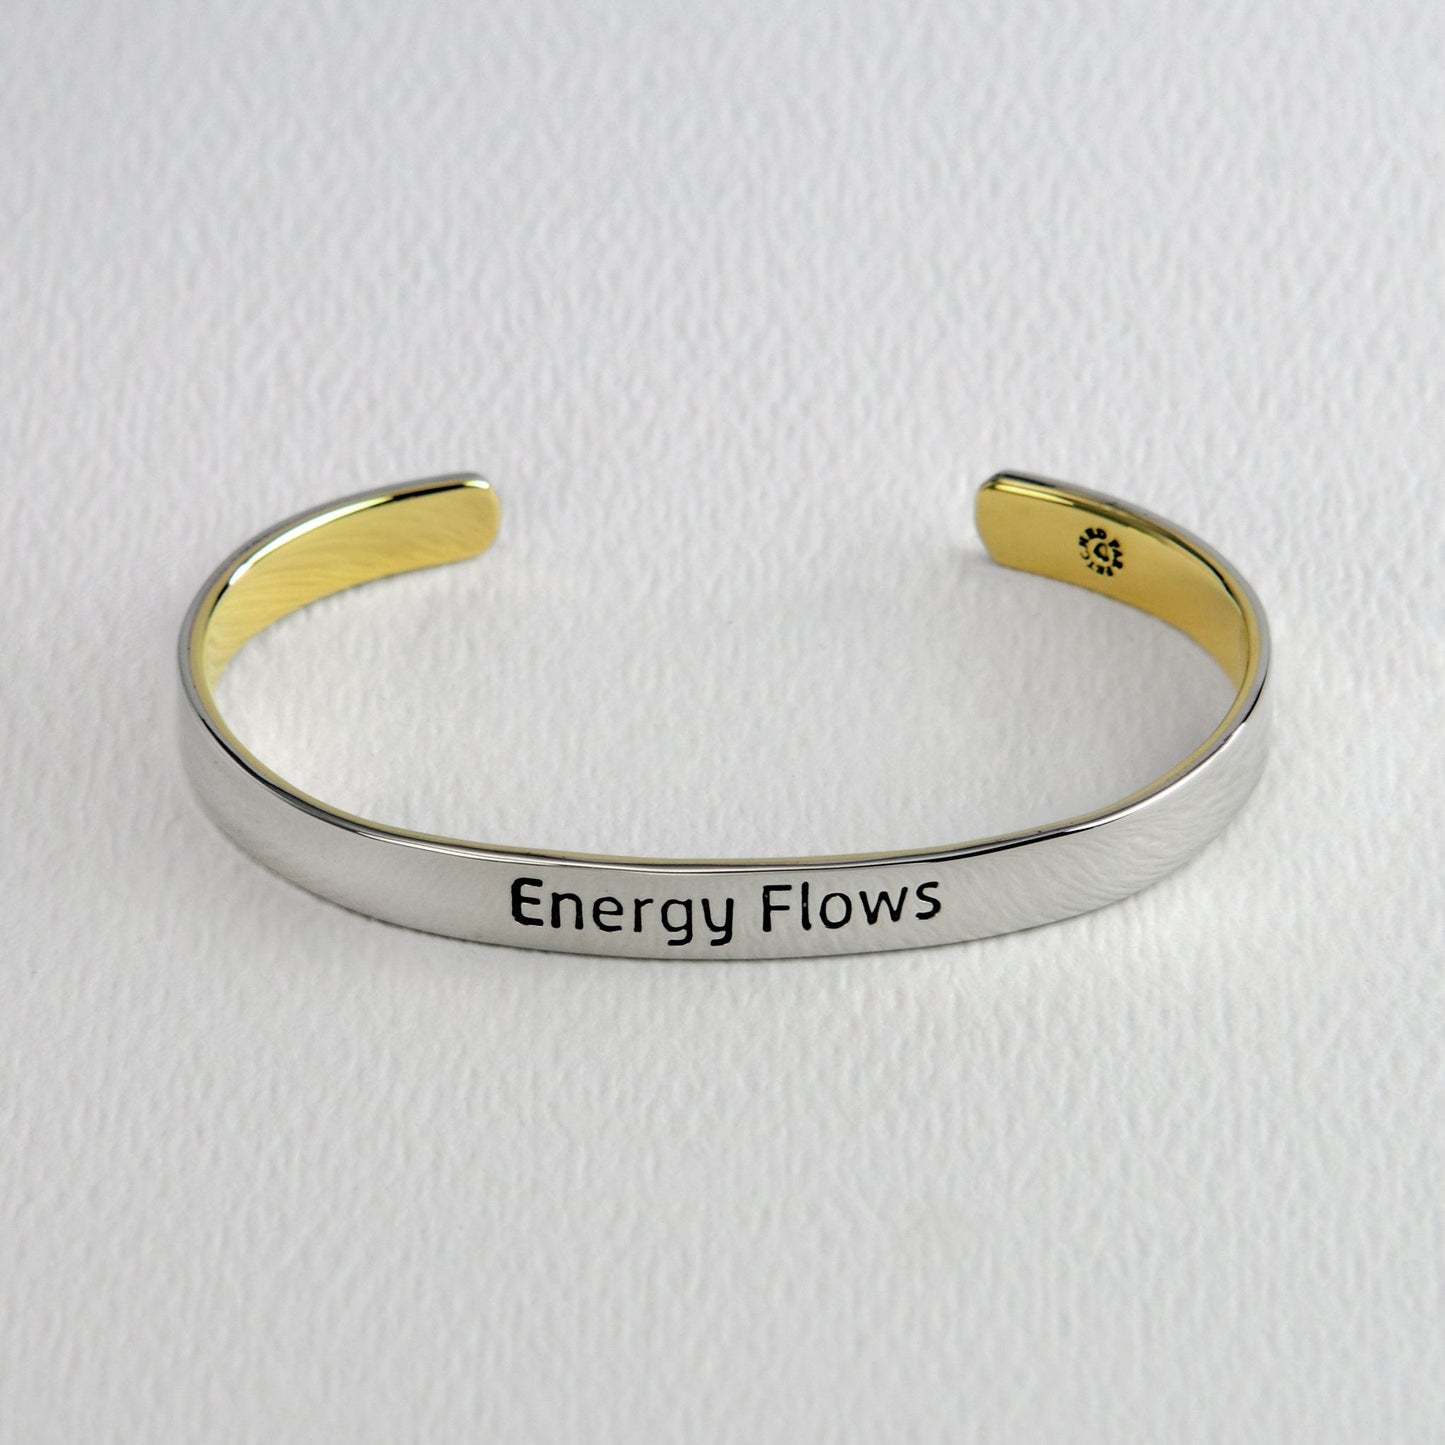 Energy Flows Mixed Metals Cuff Bracelet